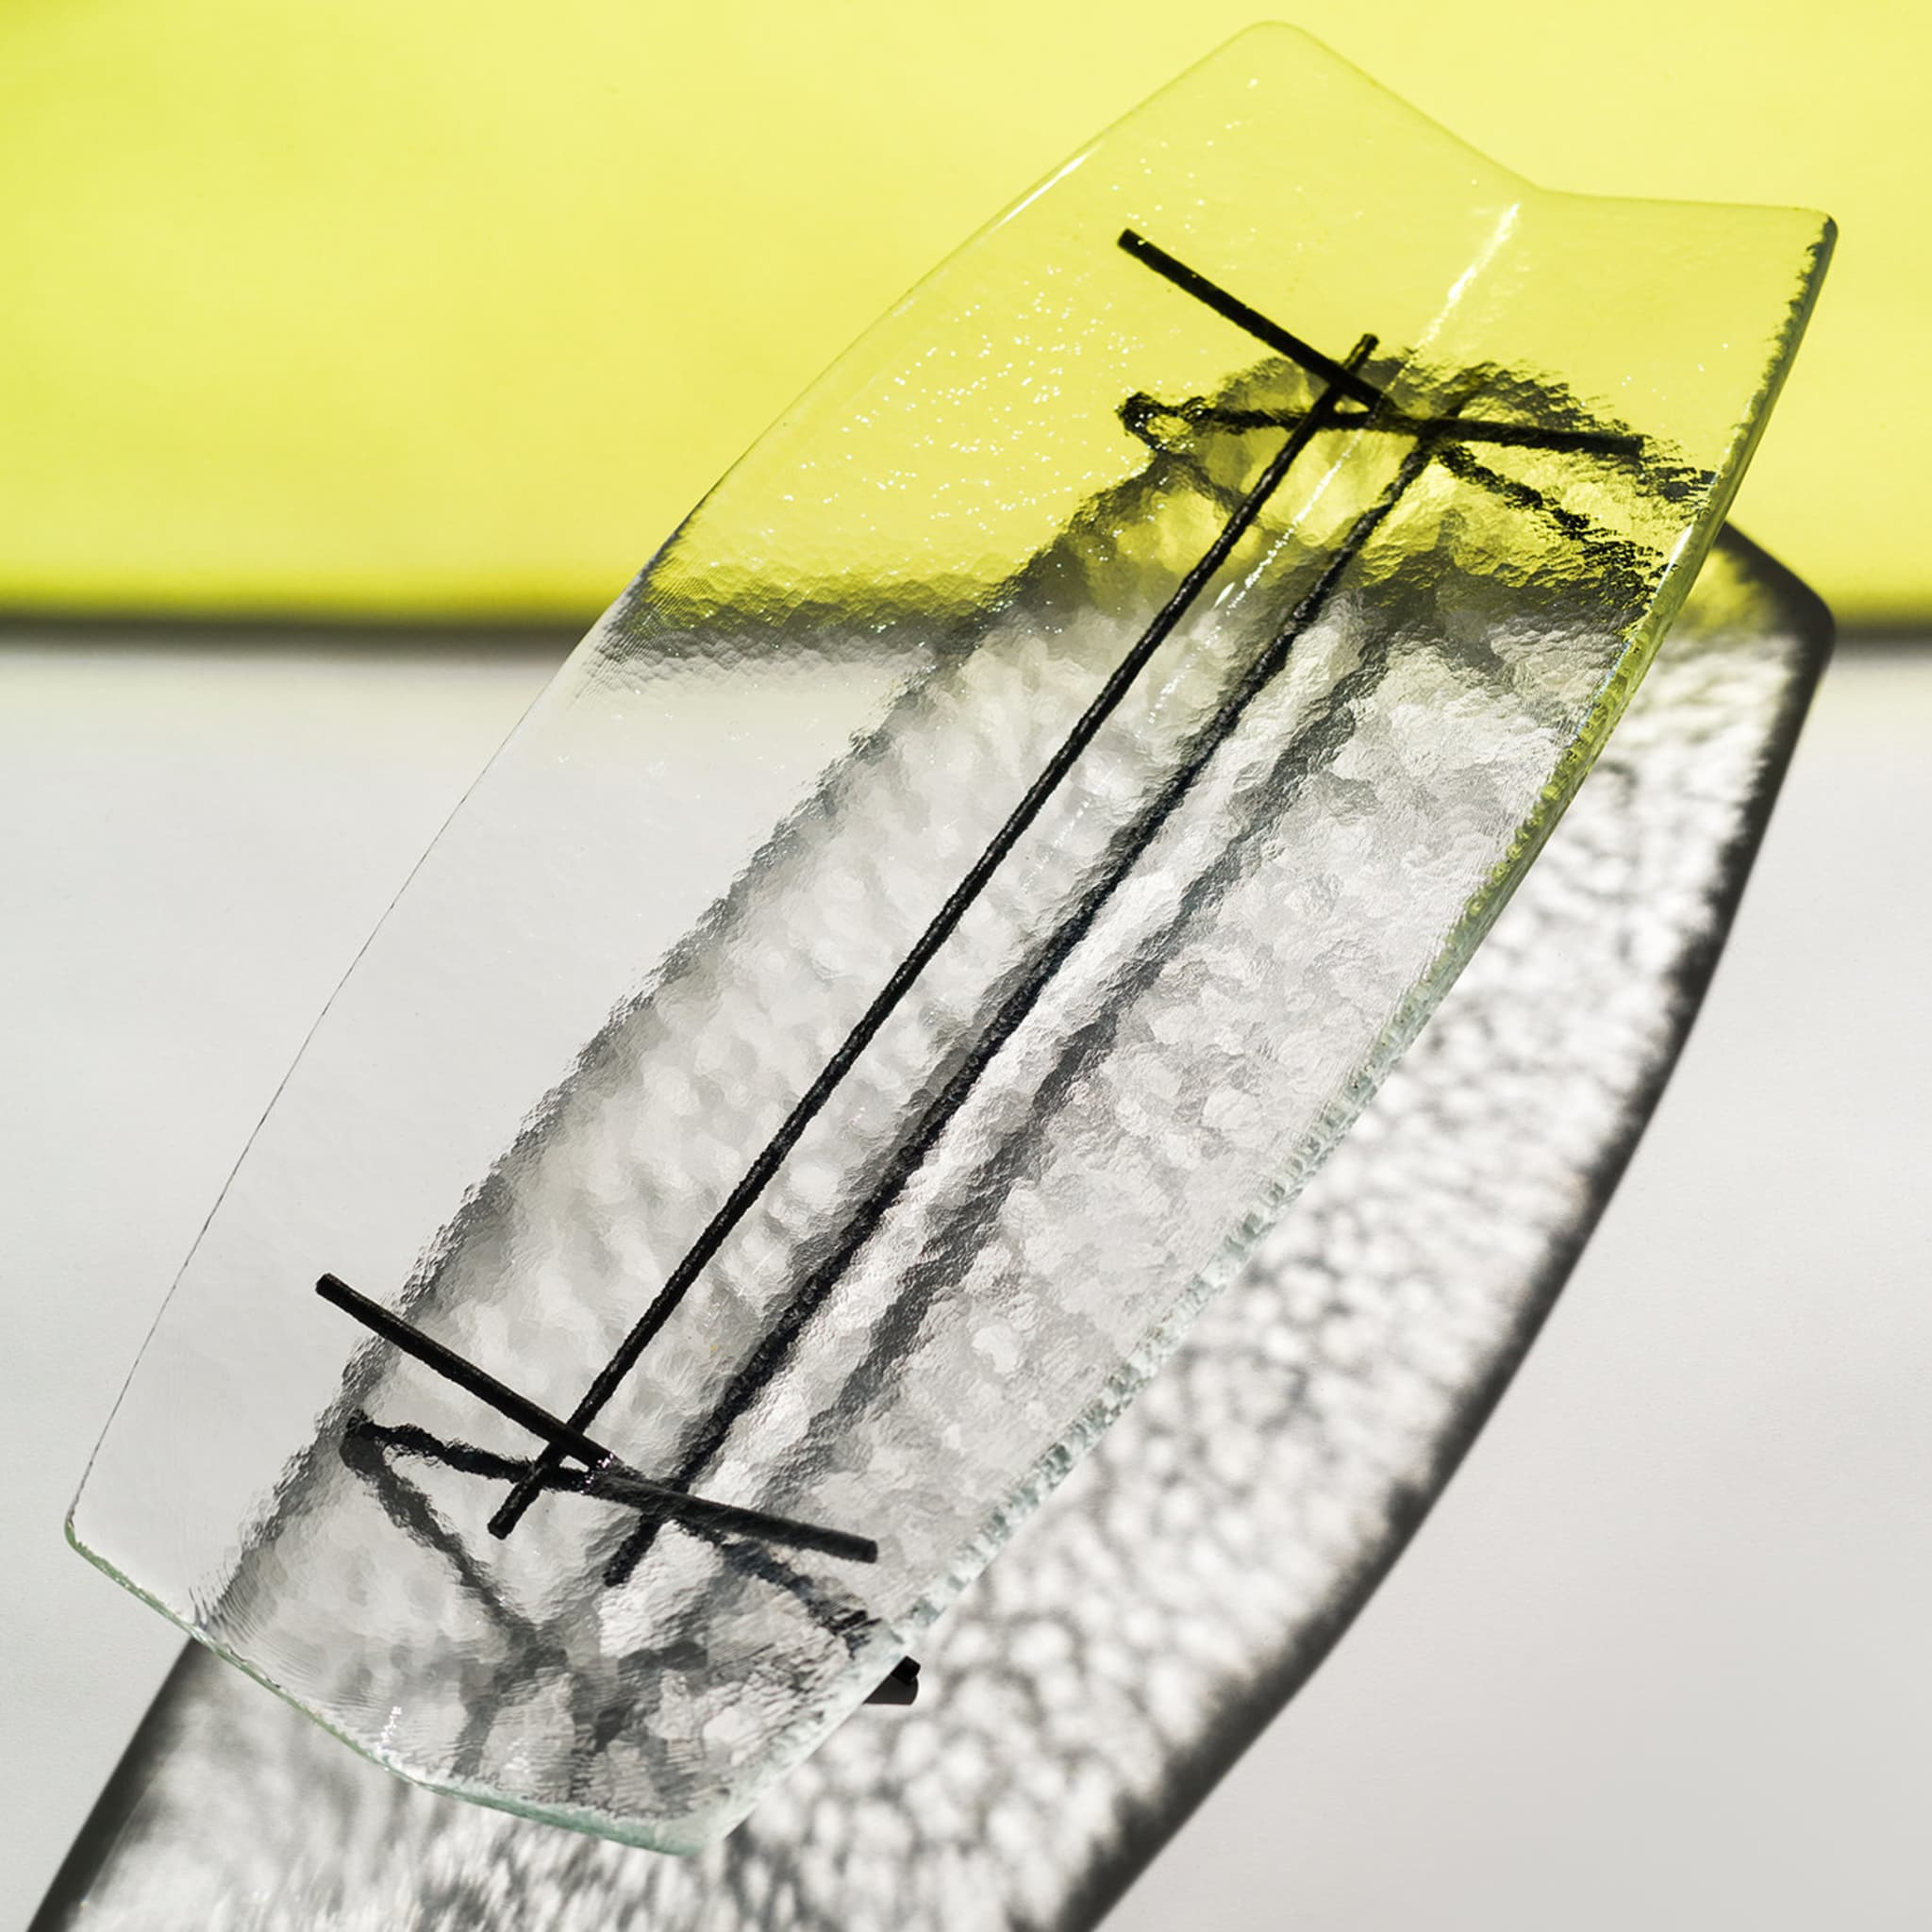 Hakou transparent glass centerpiece - Alternative view 1